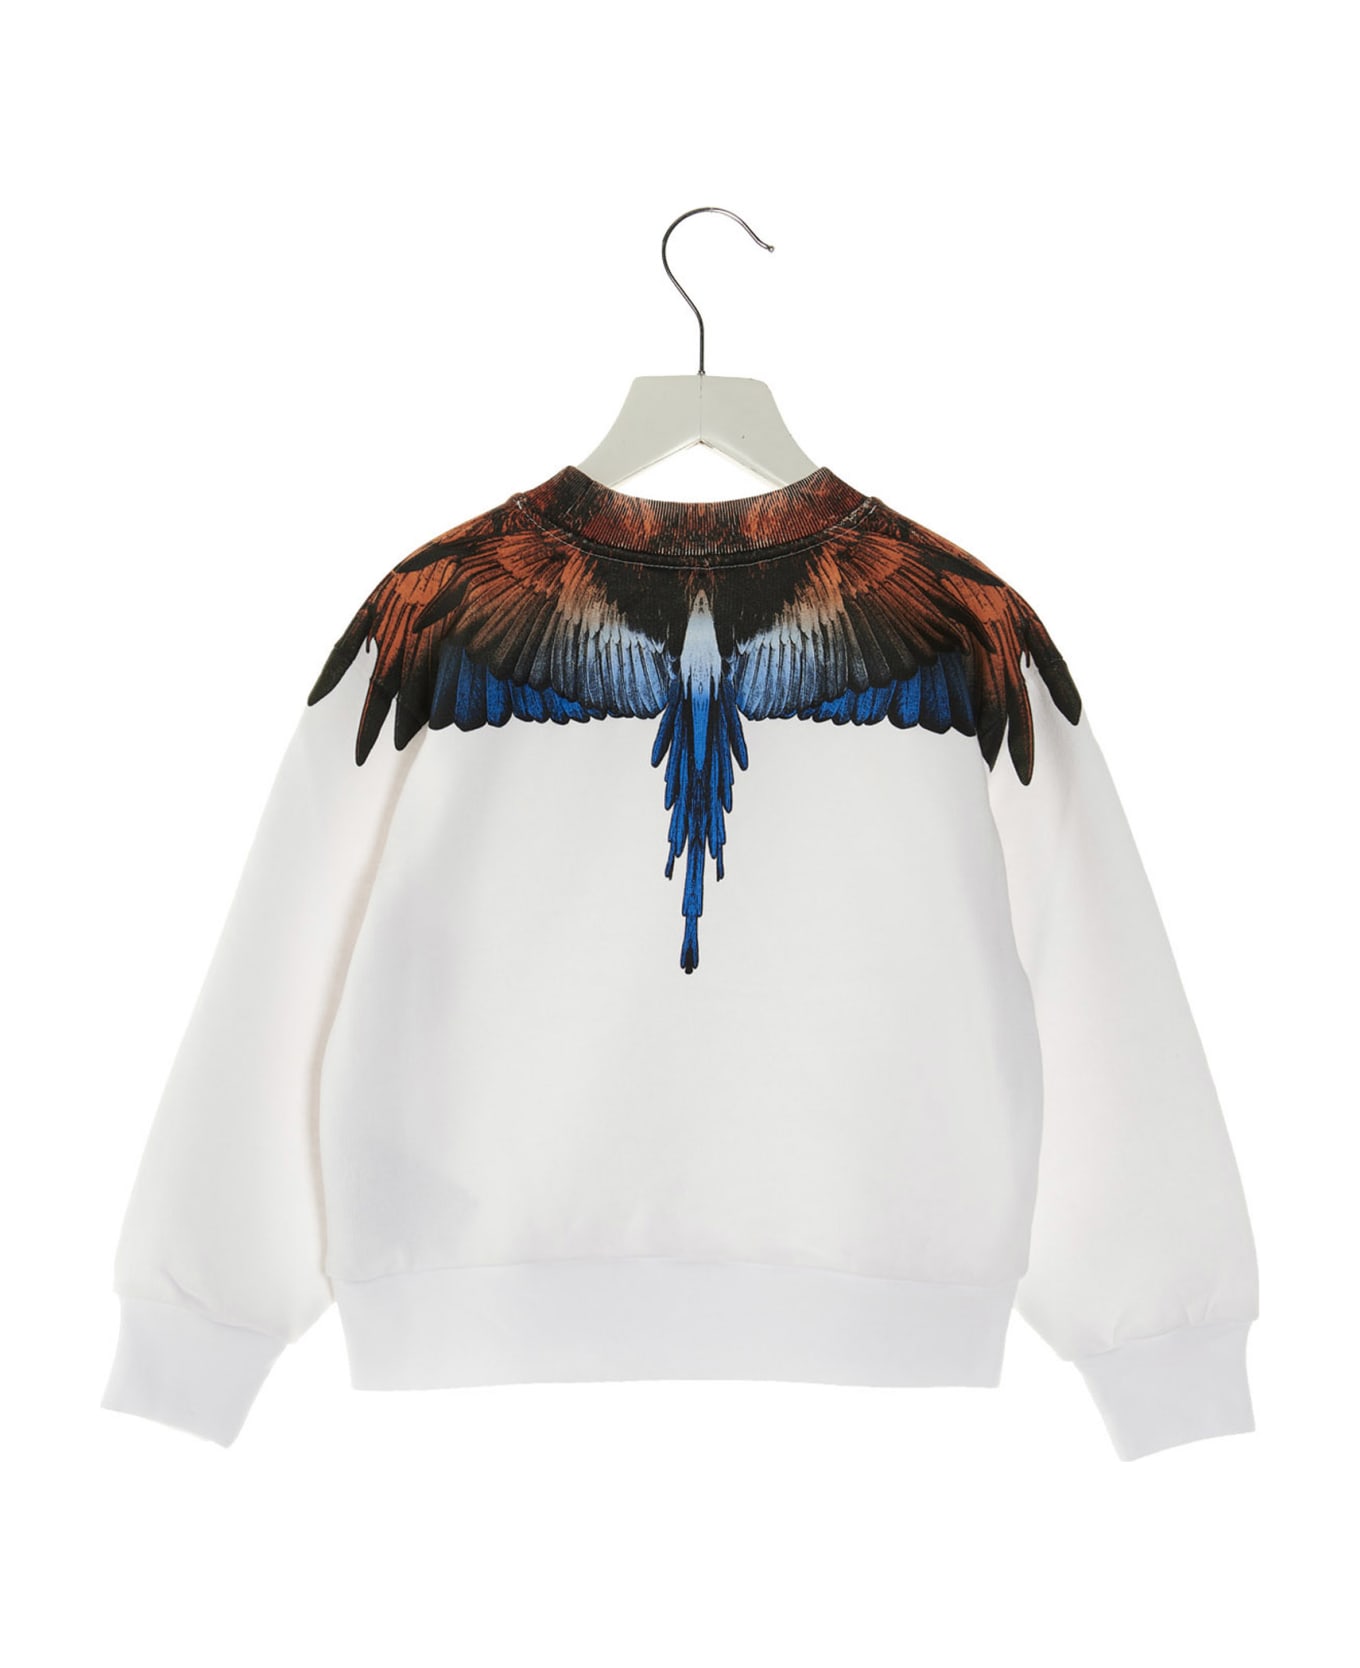 Marcelo Burlon 'orange Blue Wings' Sweatshirt - White